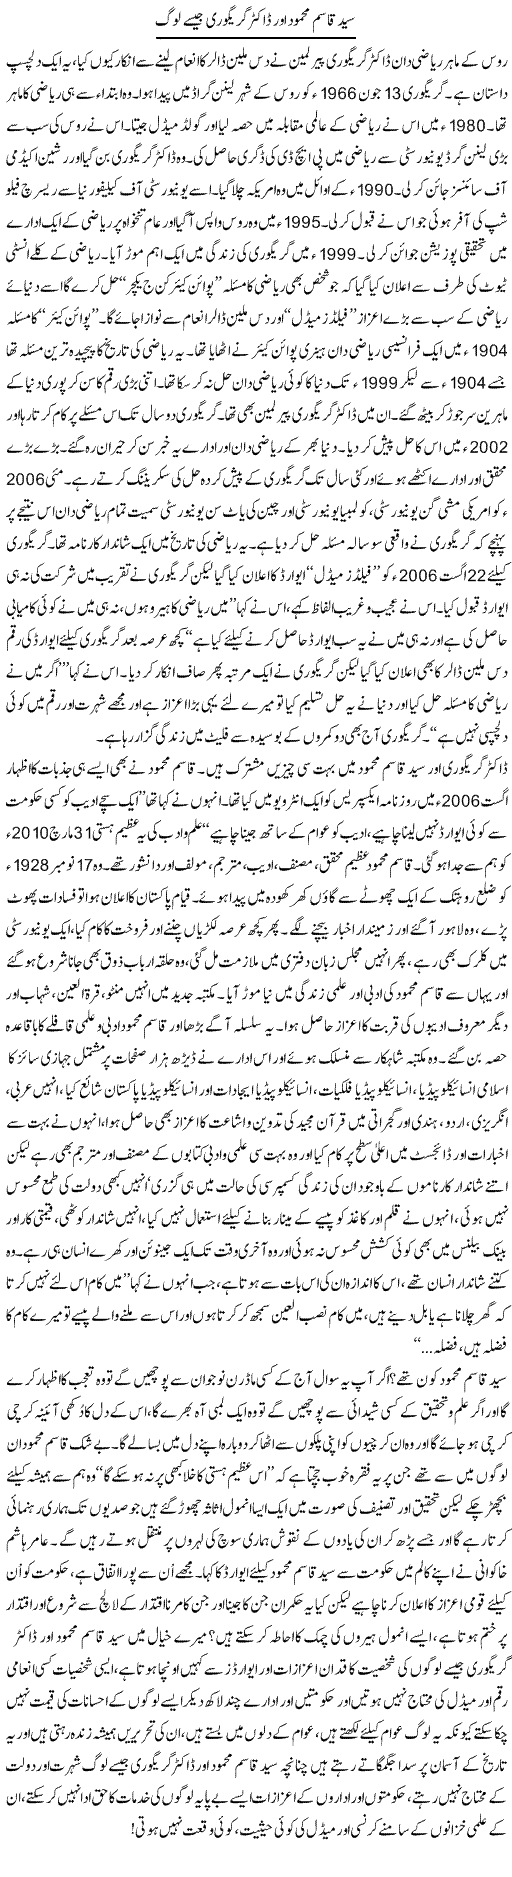 Syed Qasim Dr Karogari Express Column Amad Chaudhary 5 April 2010